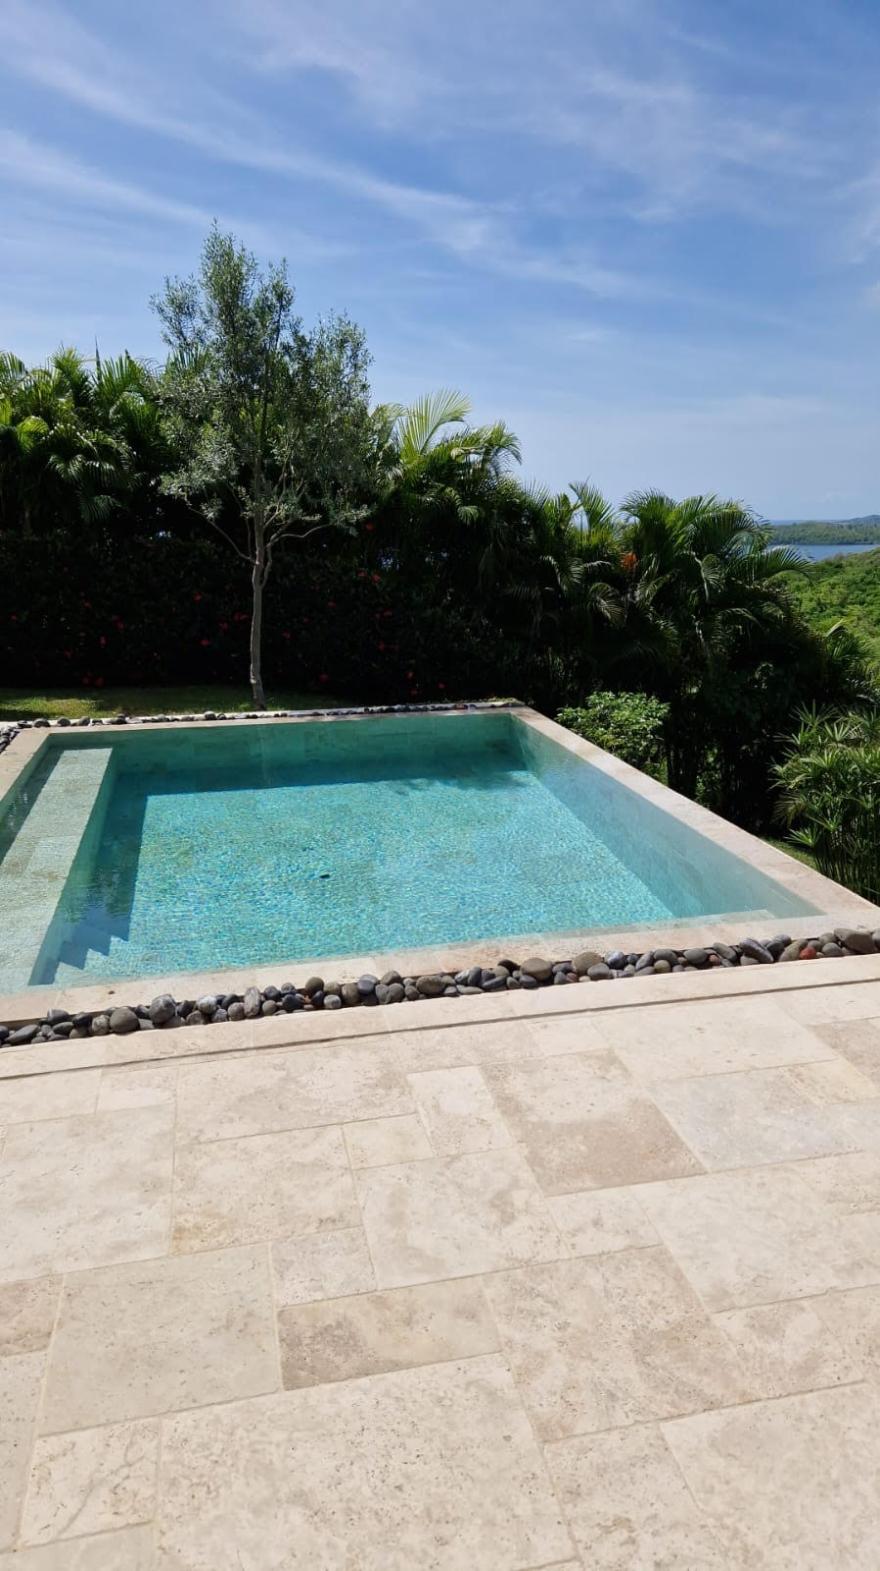 Travertin TOPLIGHT en Opus Romain terrasse, margelle et intérieur piscine